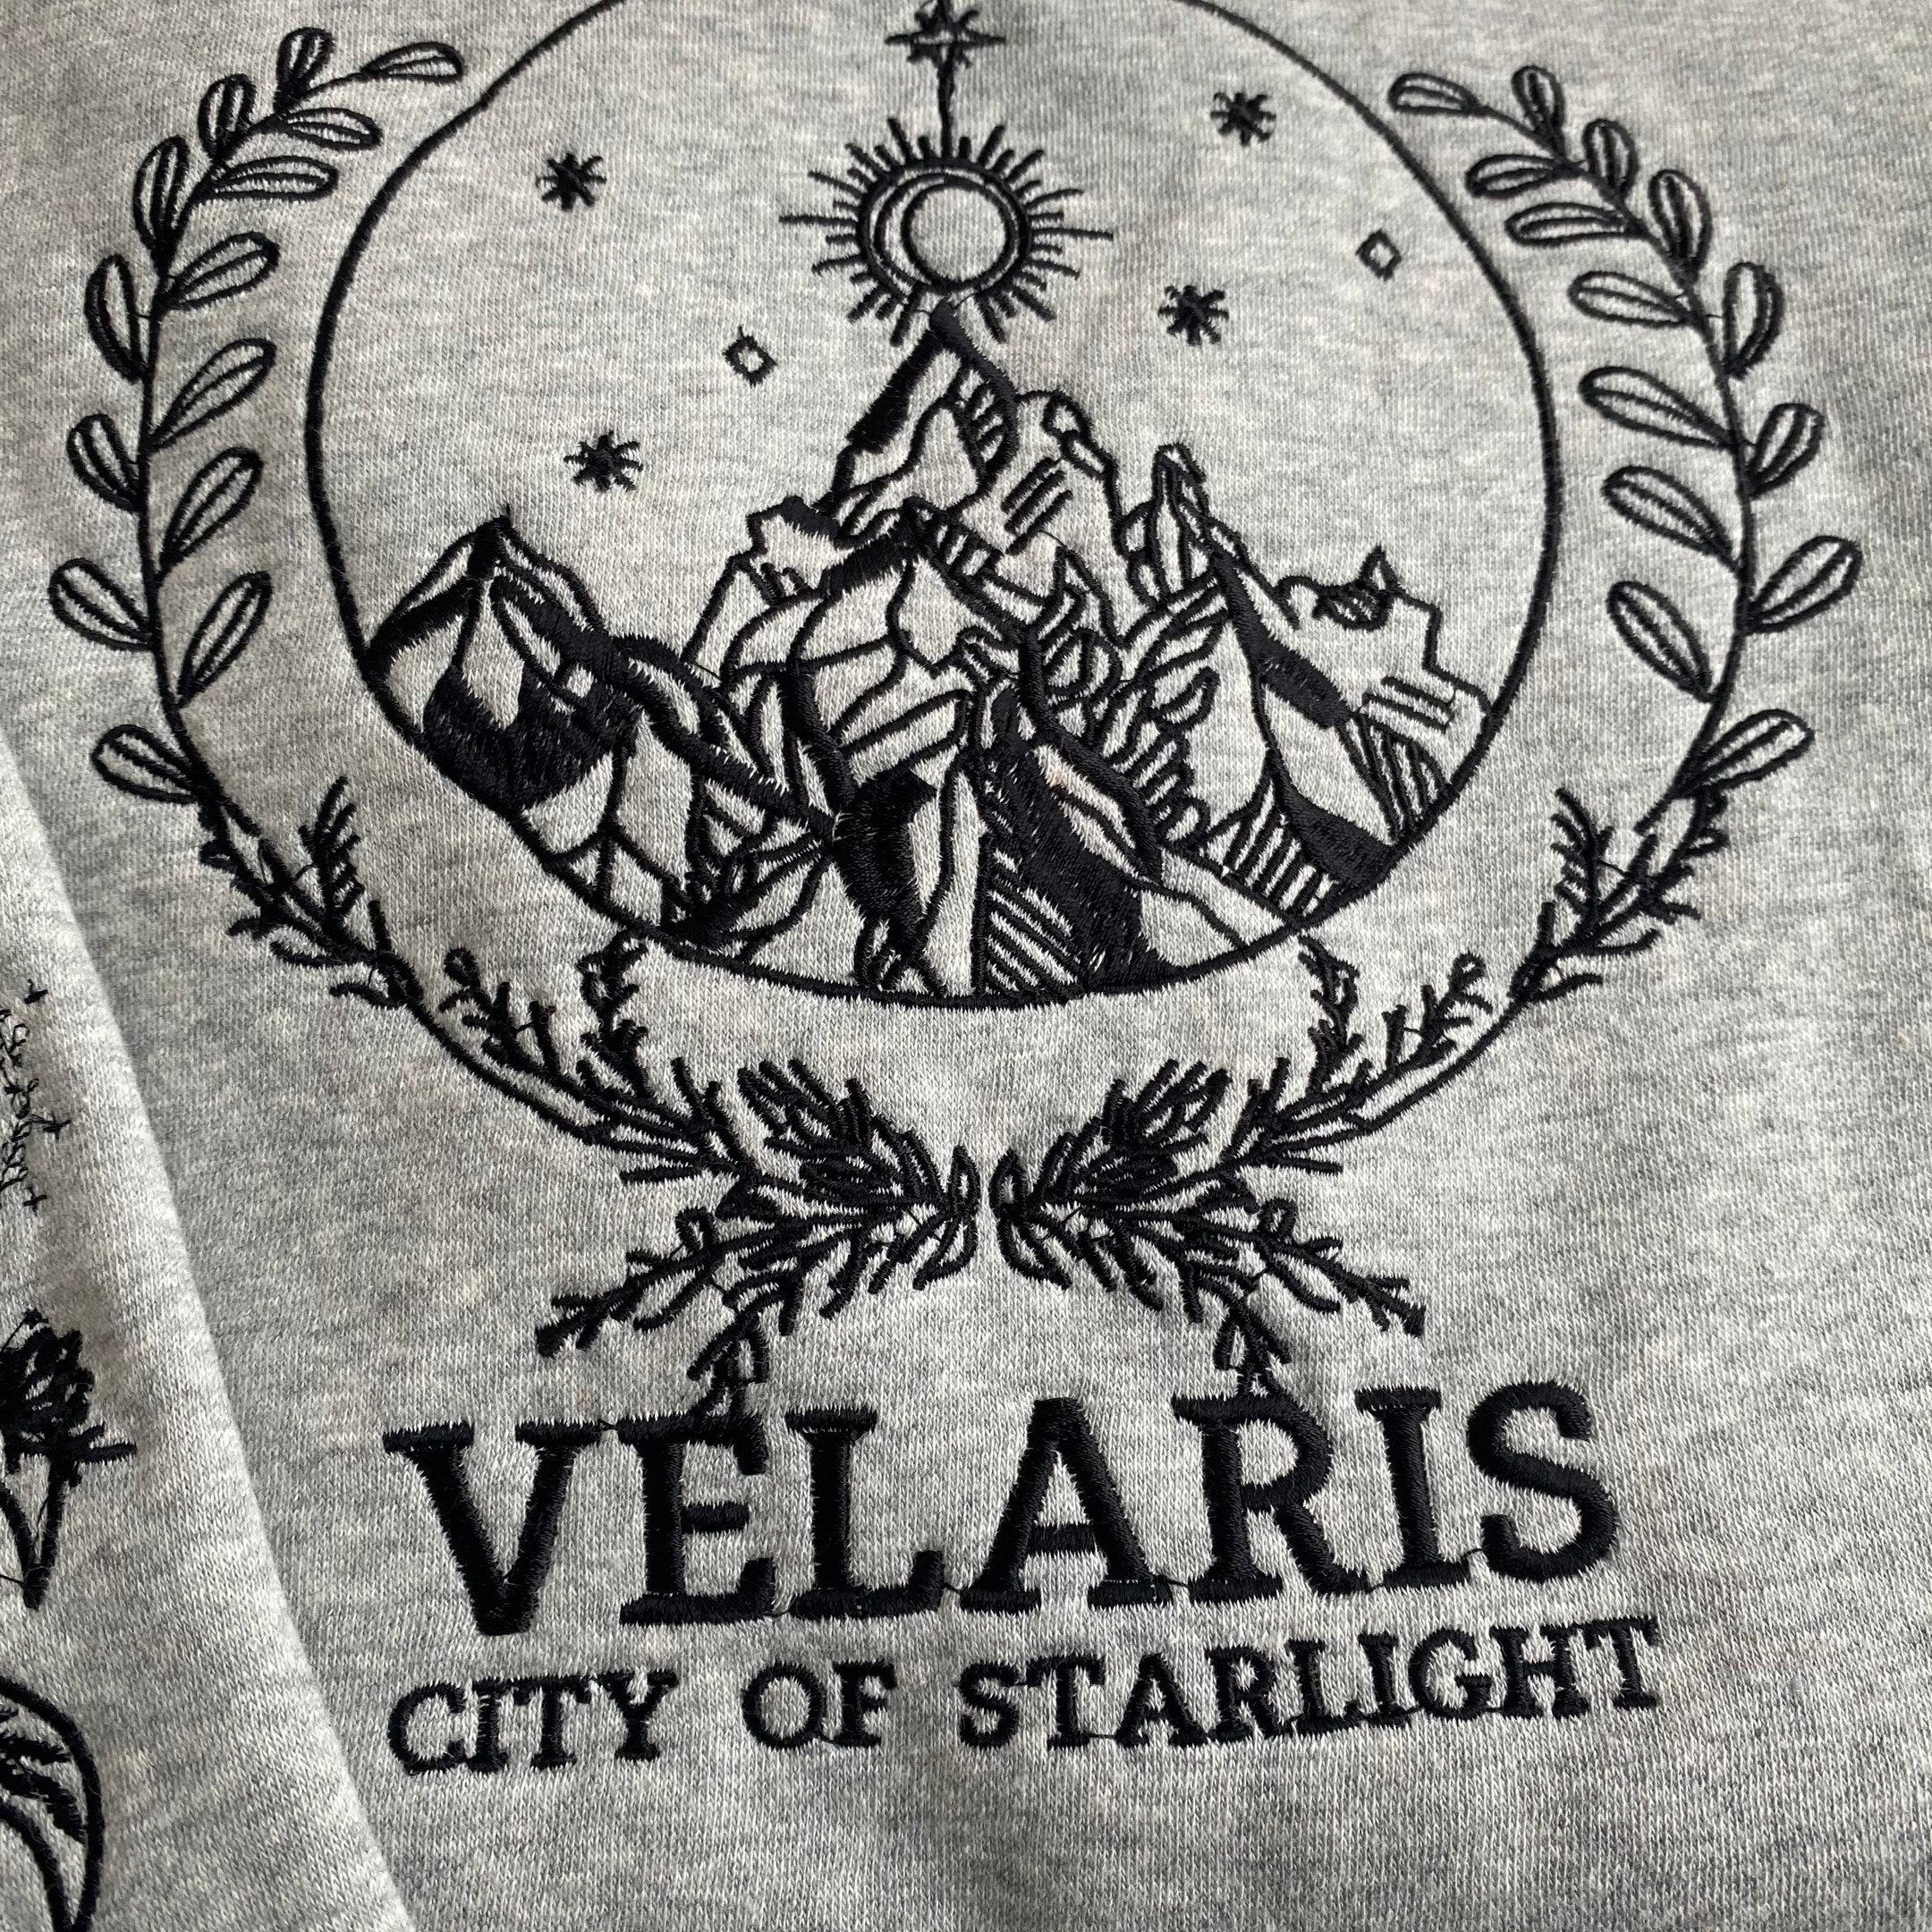 Velaris City Of Starlight Embroidered Sweatshirt, Acotar Embroidered Hoodie, Bookish Gift